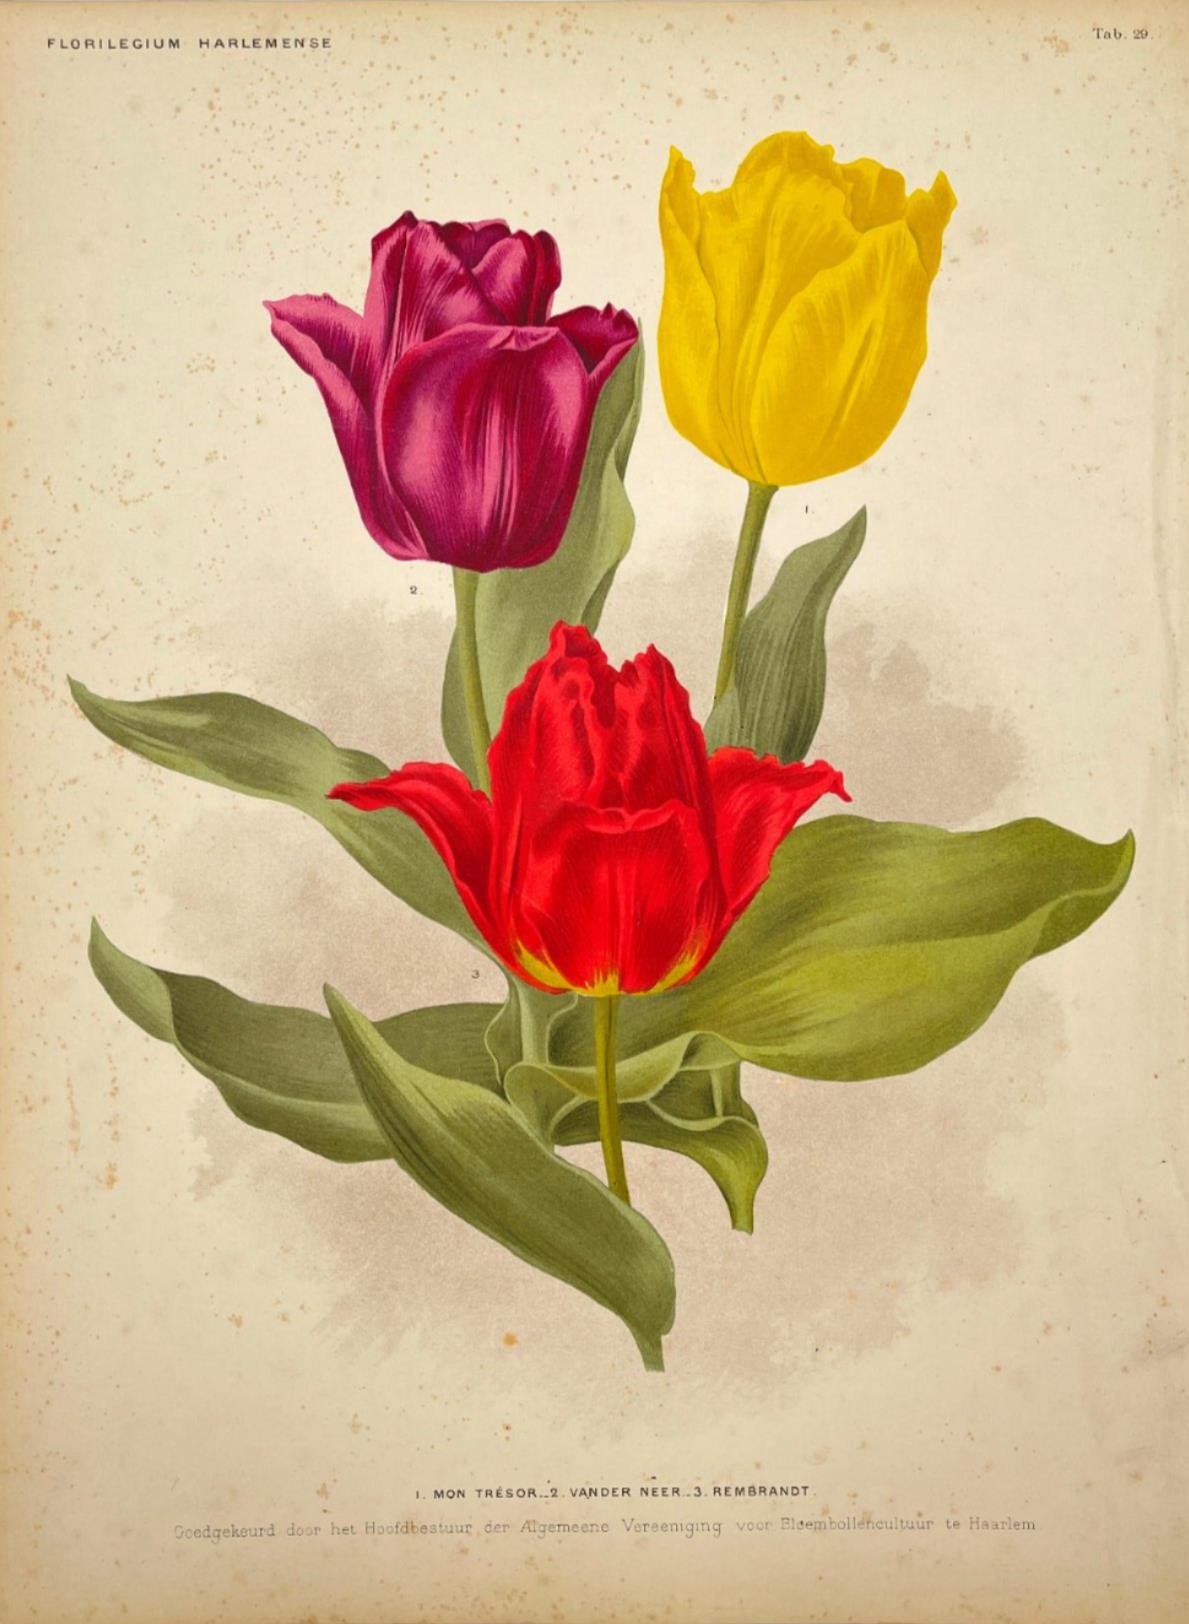 Antique Botanical Print - Flower Art - Tulip - Vander Neer - Goffart & Severeijn - Dahlströms Fine Art